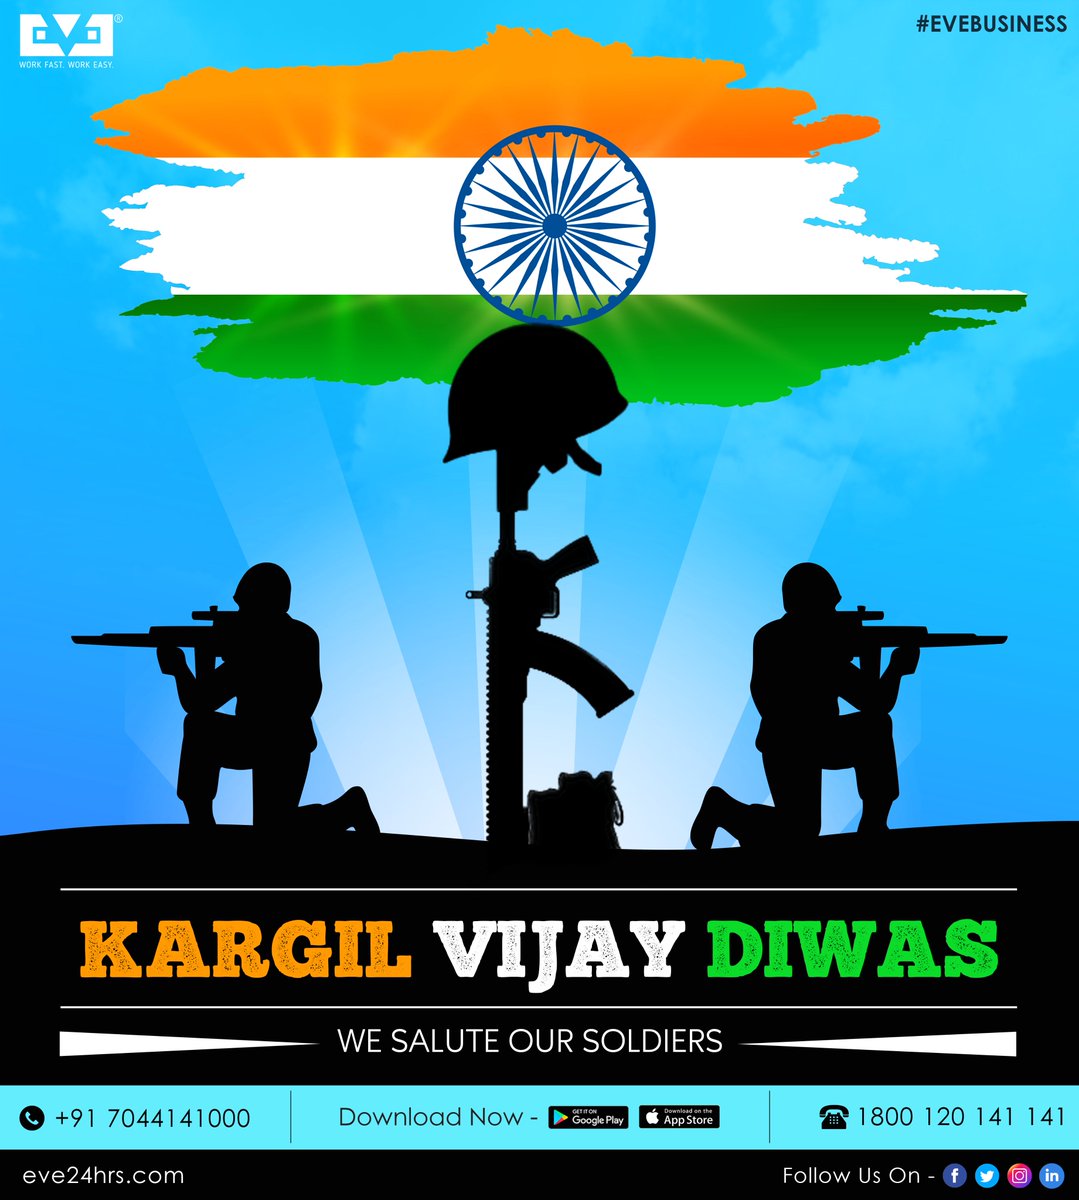 Take a moment to remember our patriots of past and present! Jai Hind

#KargilVijayDiwas #KargilVijayDiwas2020 #कारगिल_विजय_दिवस #IndianArmy #CourageInKargil #kargilheros #21YearsOfKargilVijay #JaiHind
#kargildiwas #IndianArmedForces #जयहिंद #KargilKeVeer #Kargil 
#EVE #EVEApp